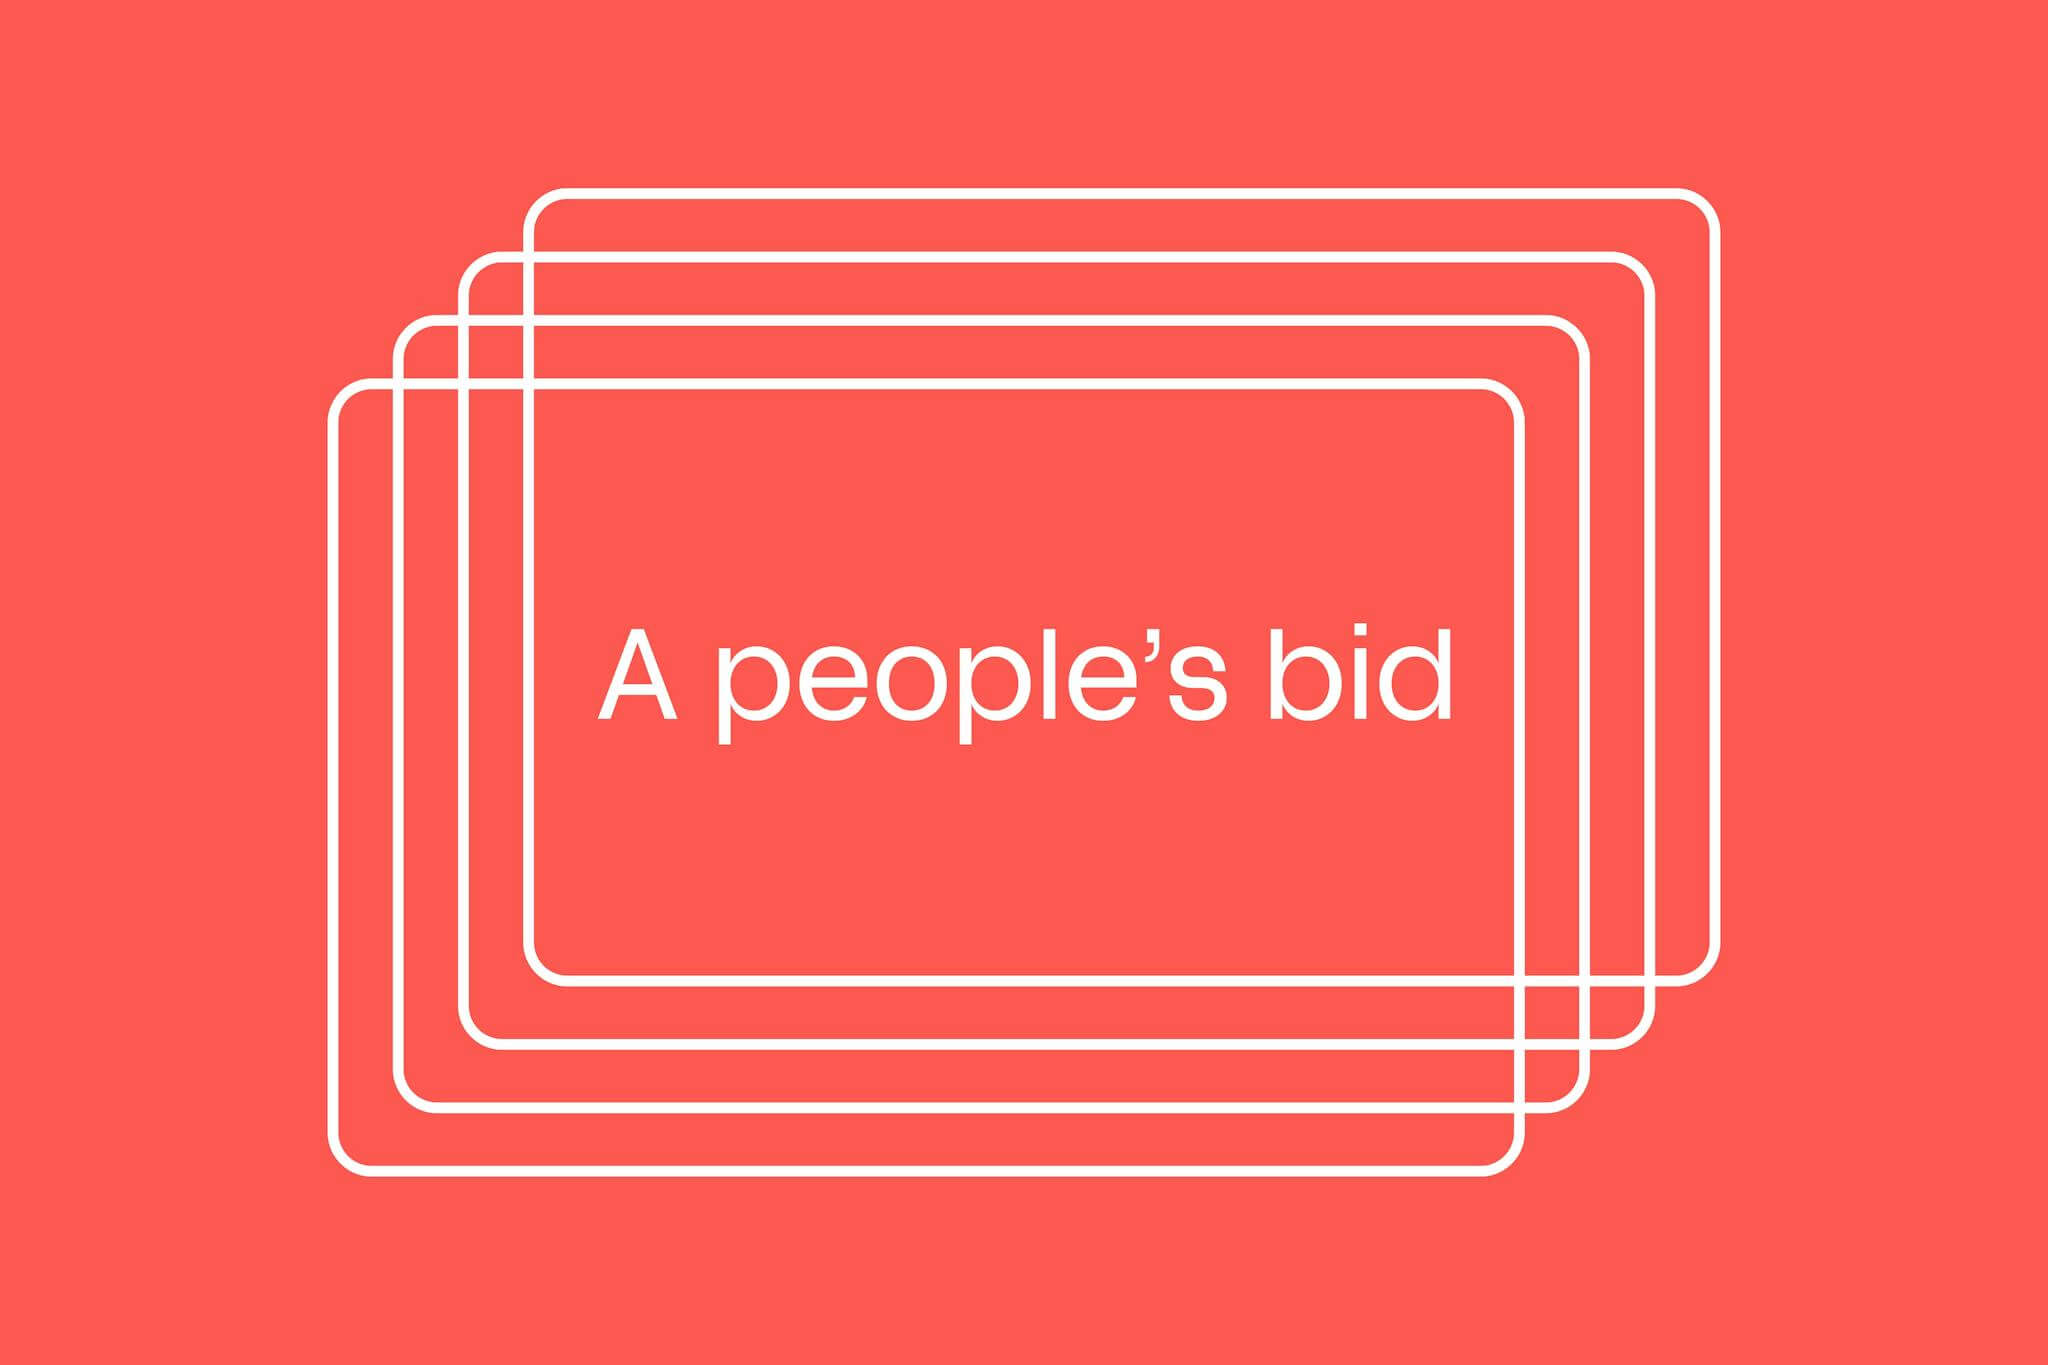 A people's bid